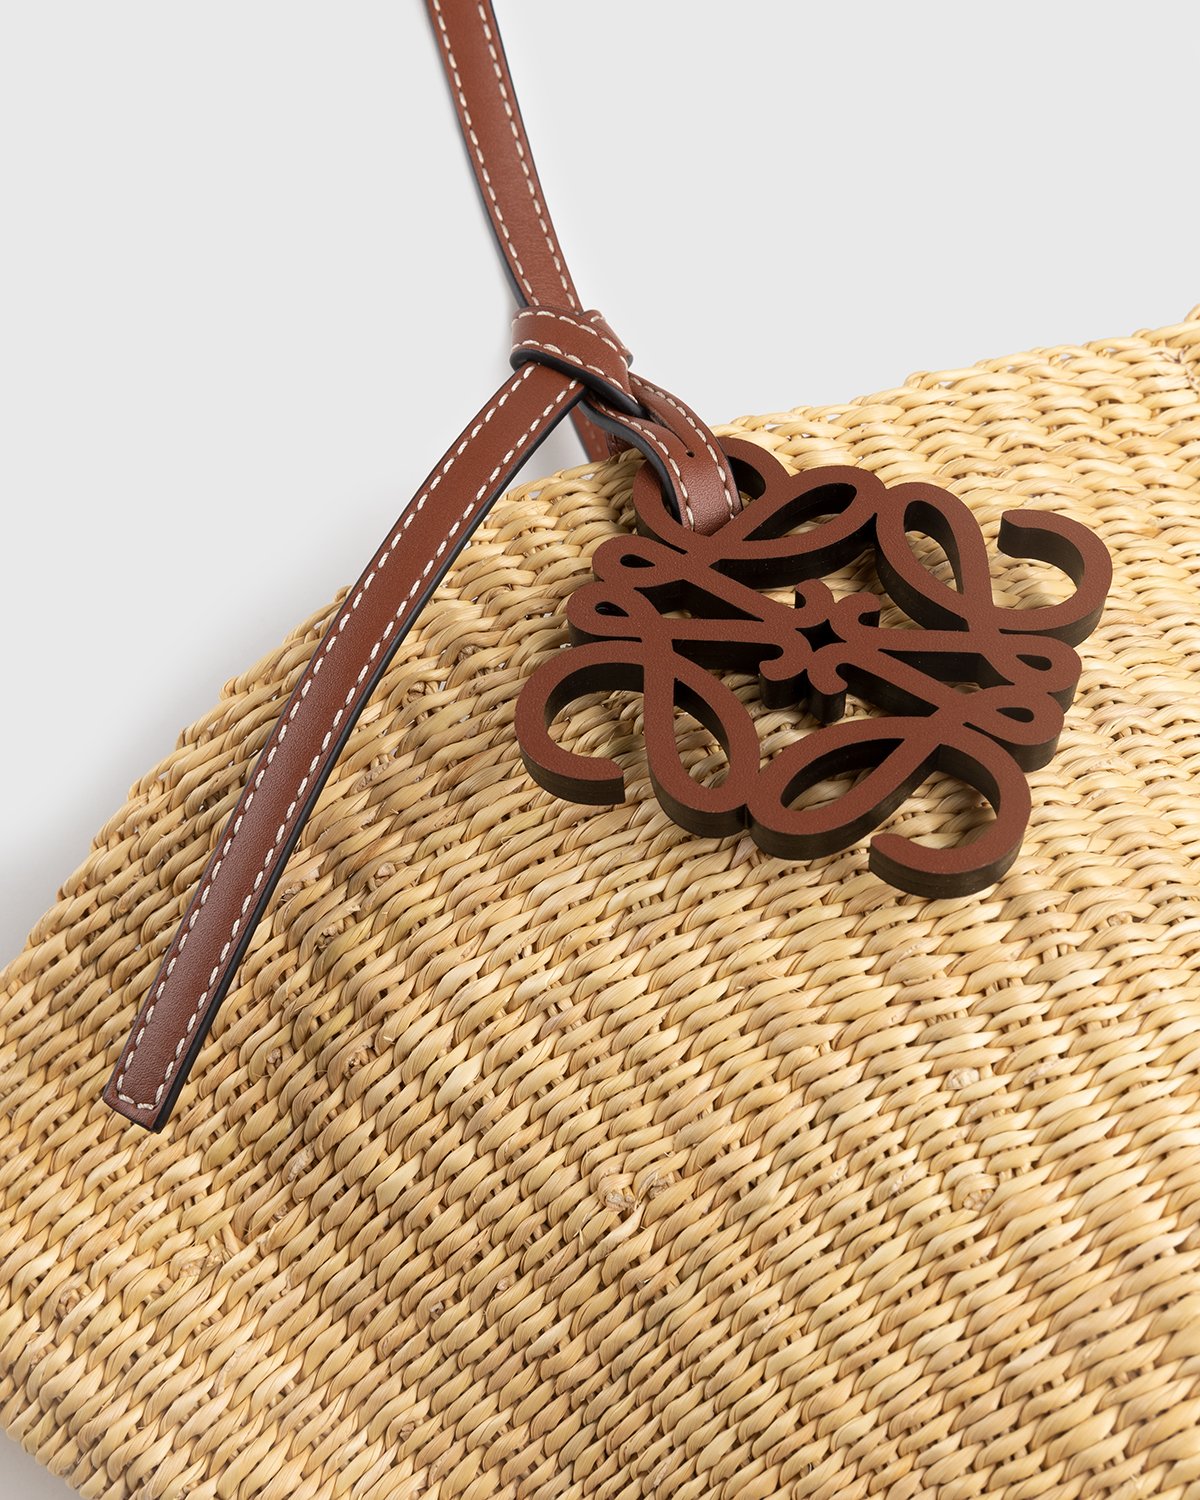 Loewe - Paula's Ibiza Small Shell Basket Bag Natural/Pecan - Accessories - Beige - Image 4